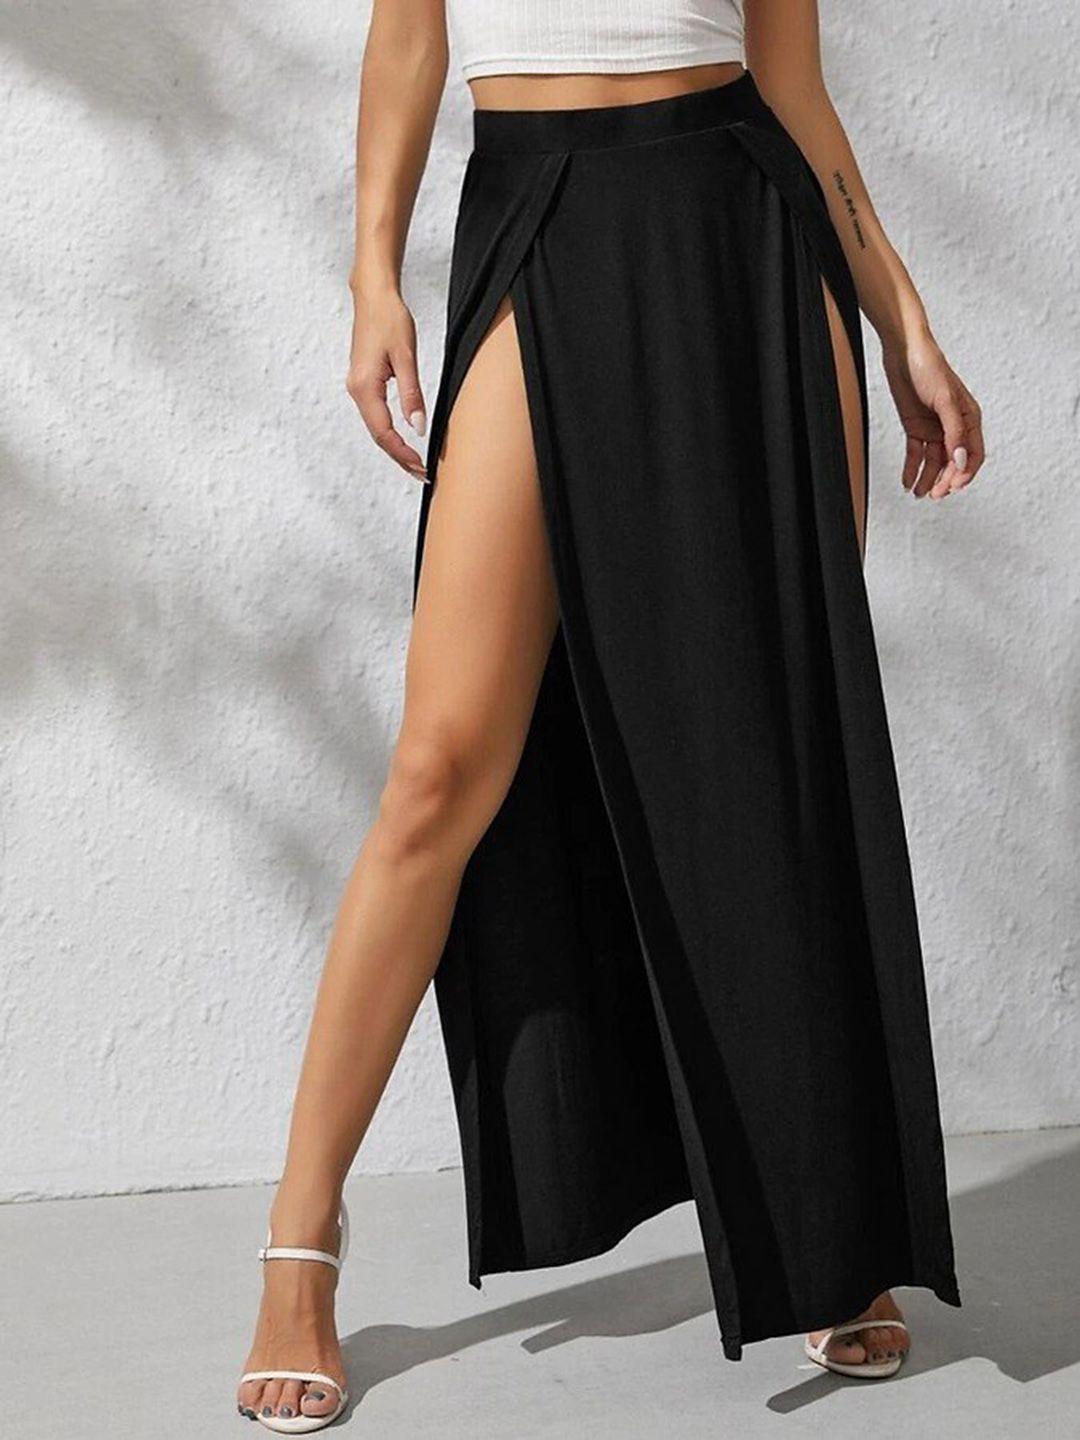 styleash straight front slit maxi skirt